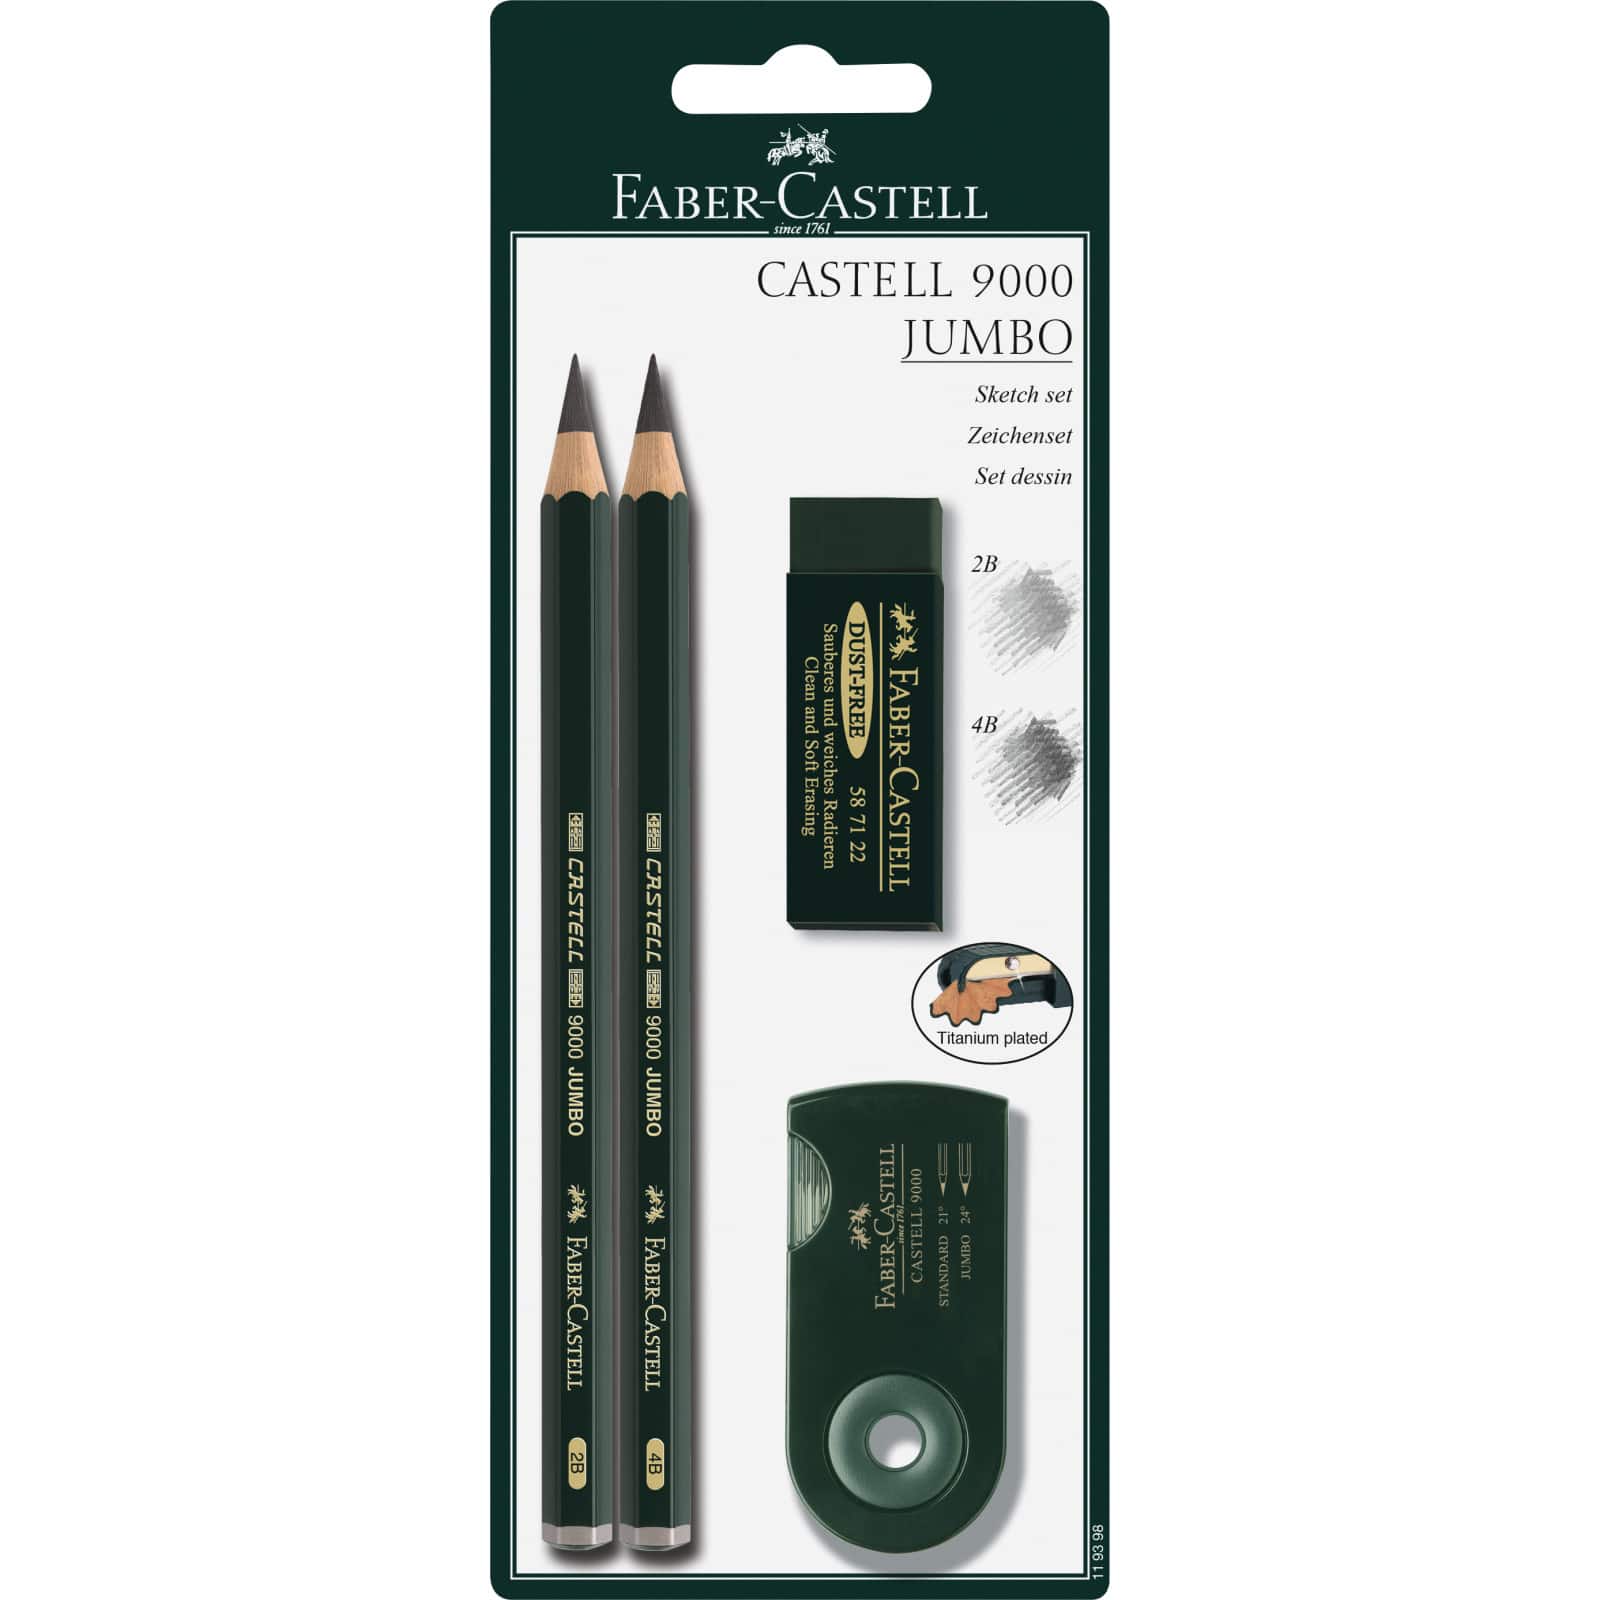 6 Pack: Faber-Castell 9000 Jumbo Graphite Pencil Sketch Set